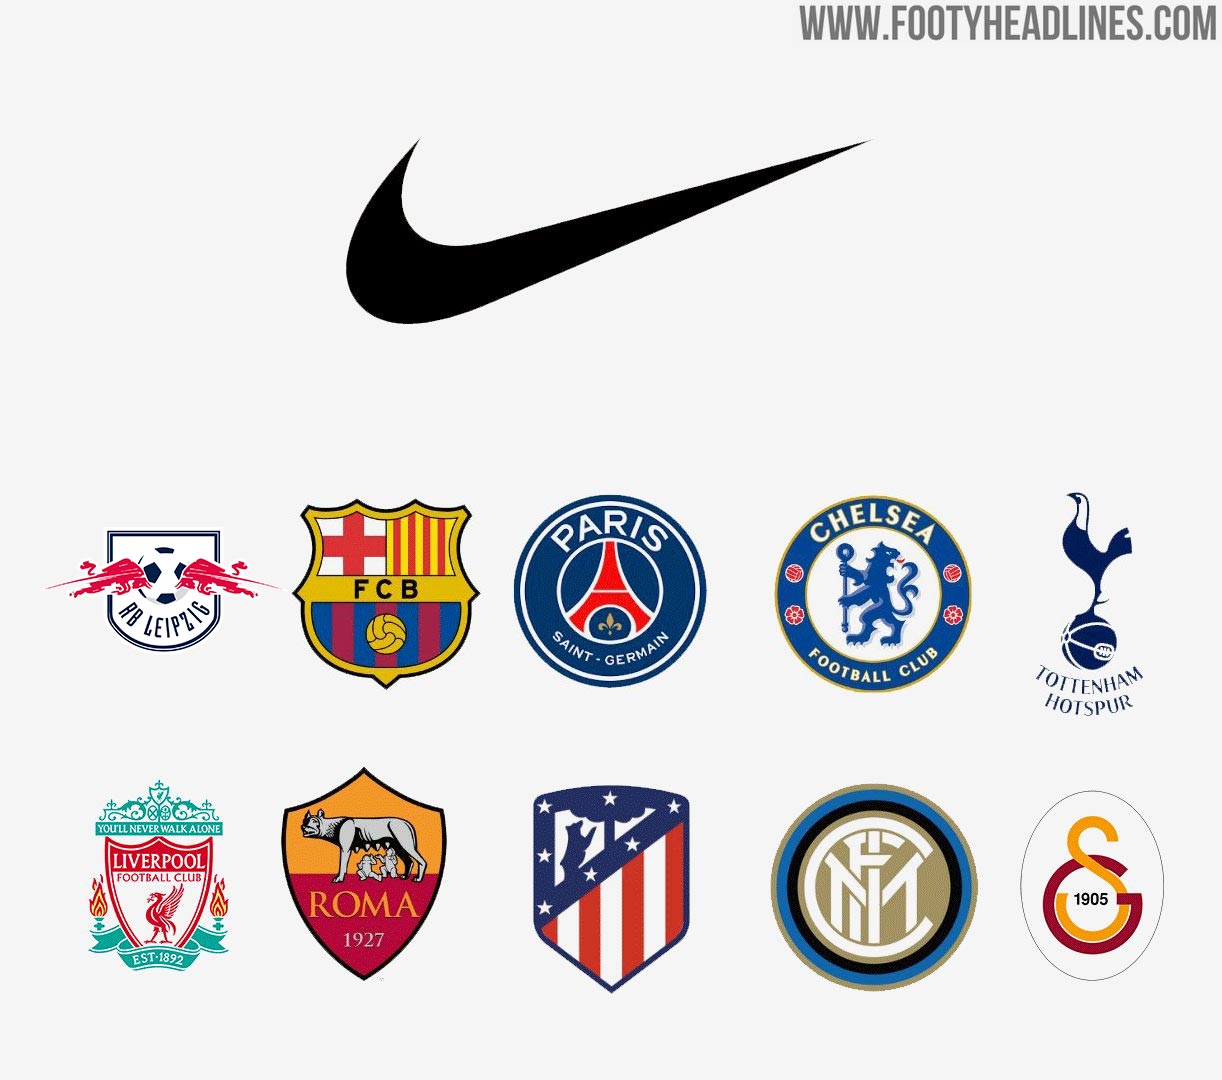 metano Íntimo algo Nike's Pyramid Of Football Kit Sponsorship - Elite, Premium, Standard,  Third Party & Not Affiliated - Footy Headlines